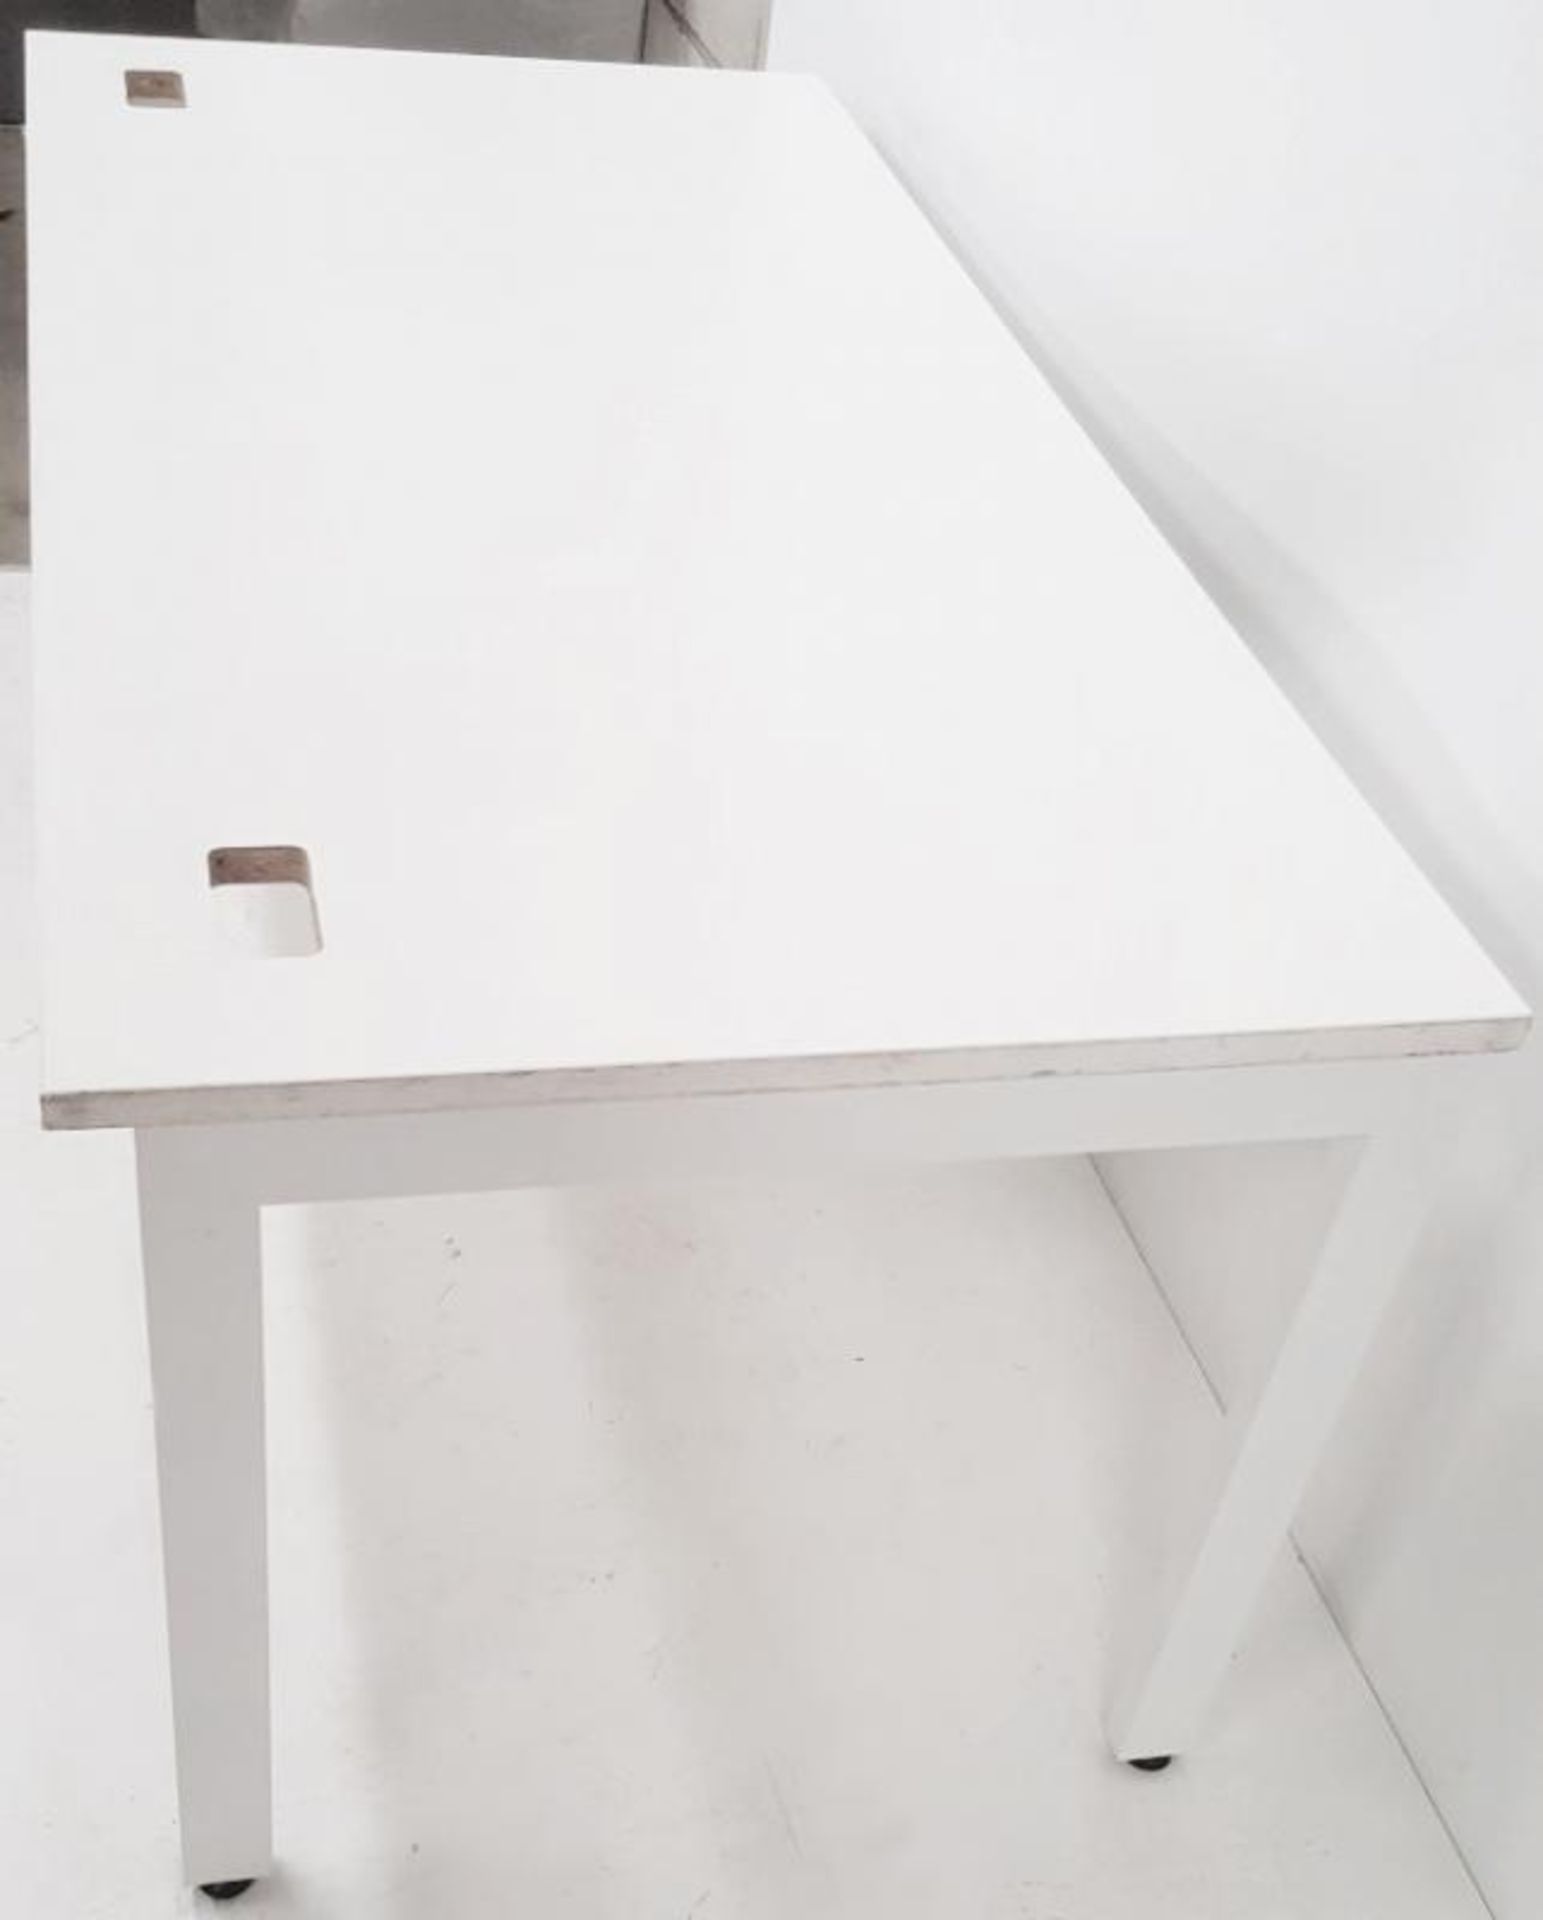 1 x Large Premium Office Desk In White - Used, In Good Condition - Dimensions: W160 x W80 x H74cm - - Bild 2 aus 5